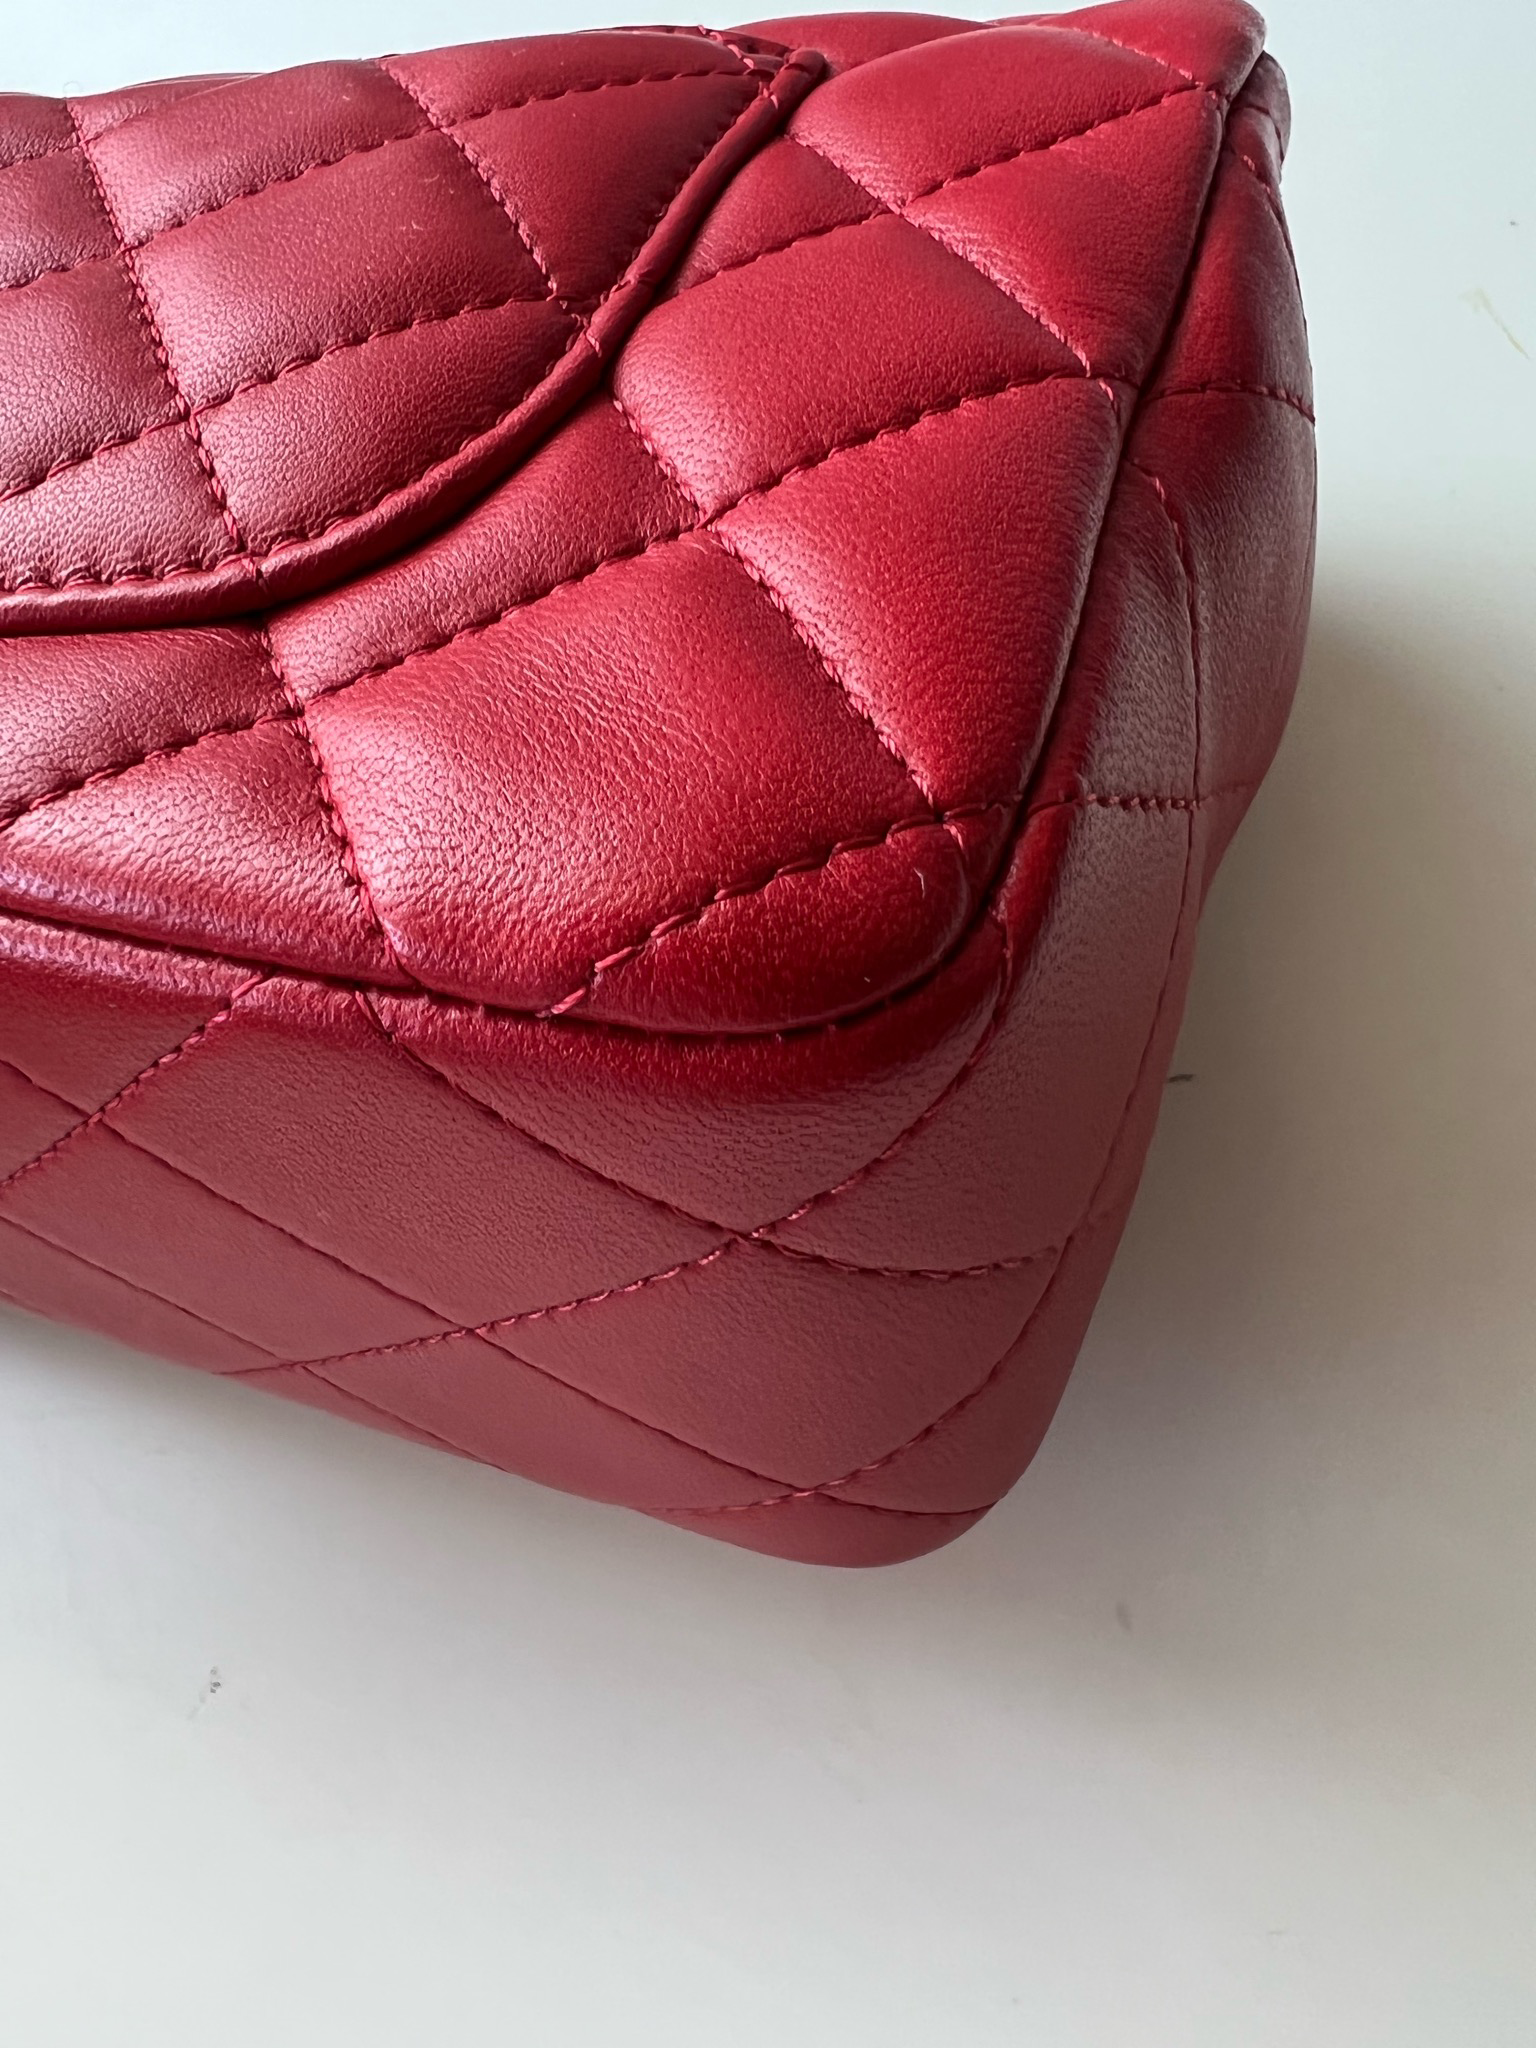 Chanel Classic Mini Rectangular, Red Lambskin with Gold Hardware, Preowned  in Box WA001